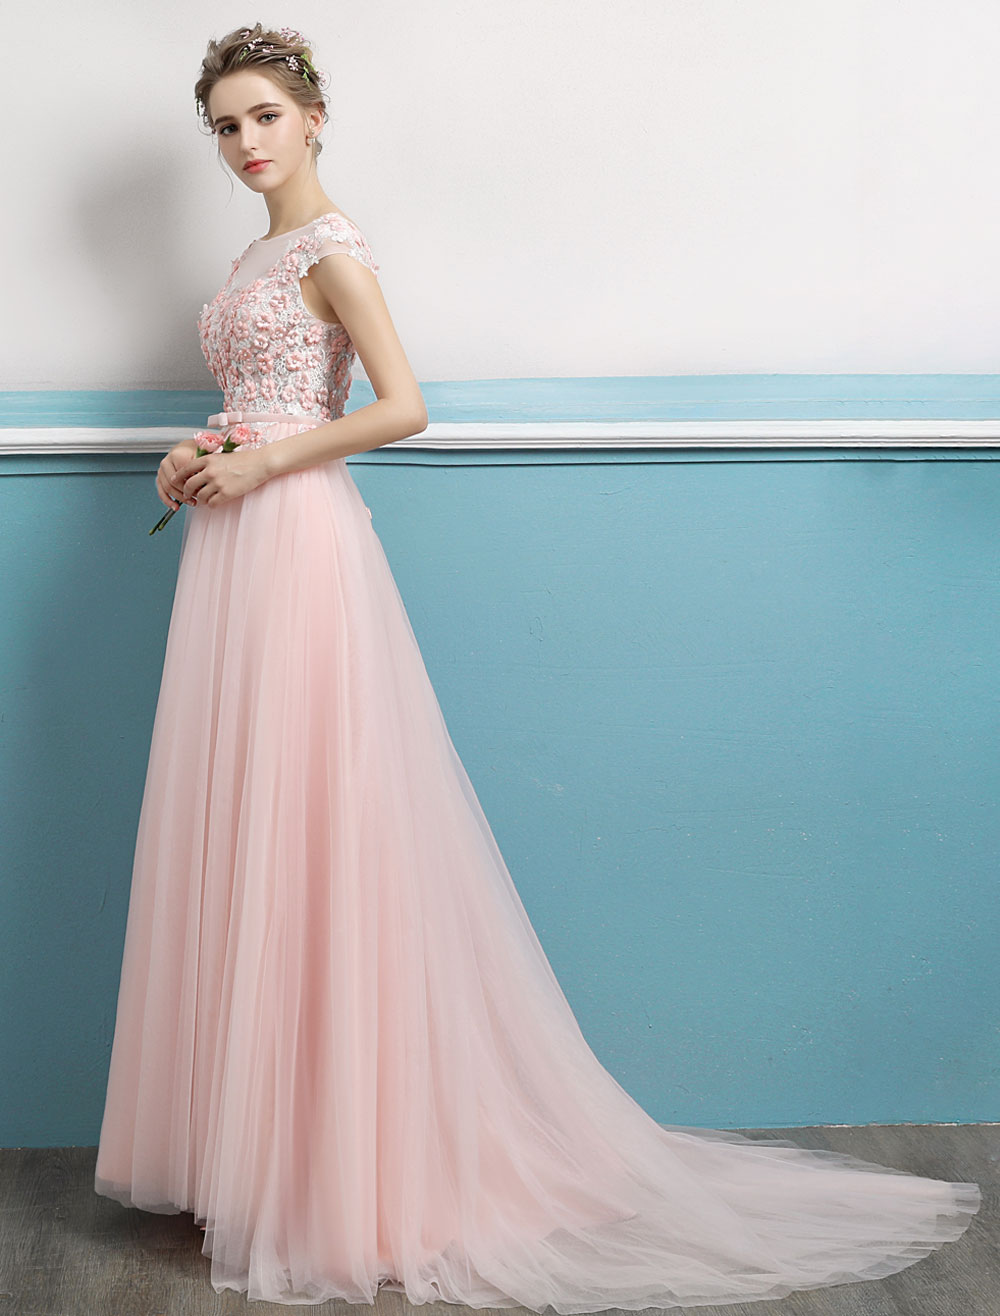 75 Long Light Pink Prom Dresses 